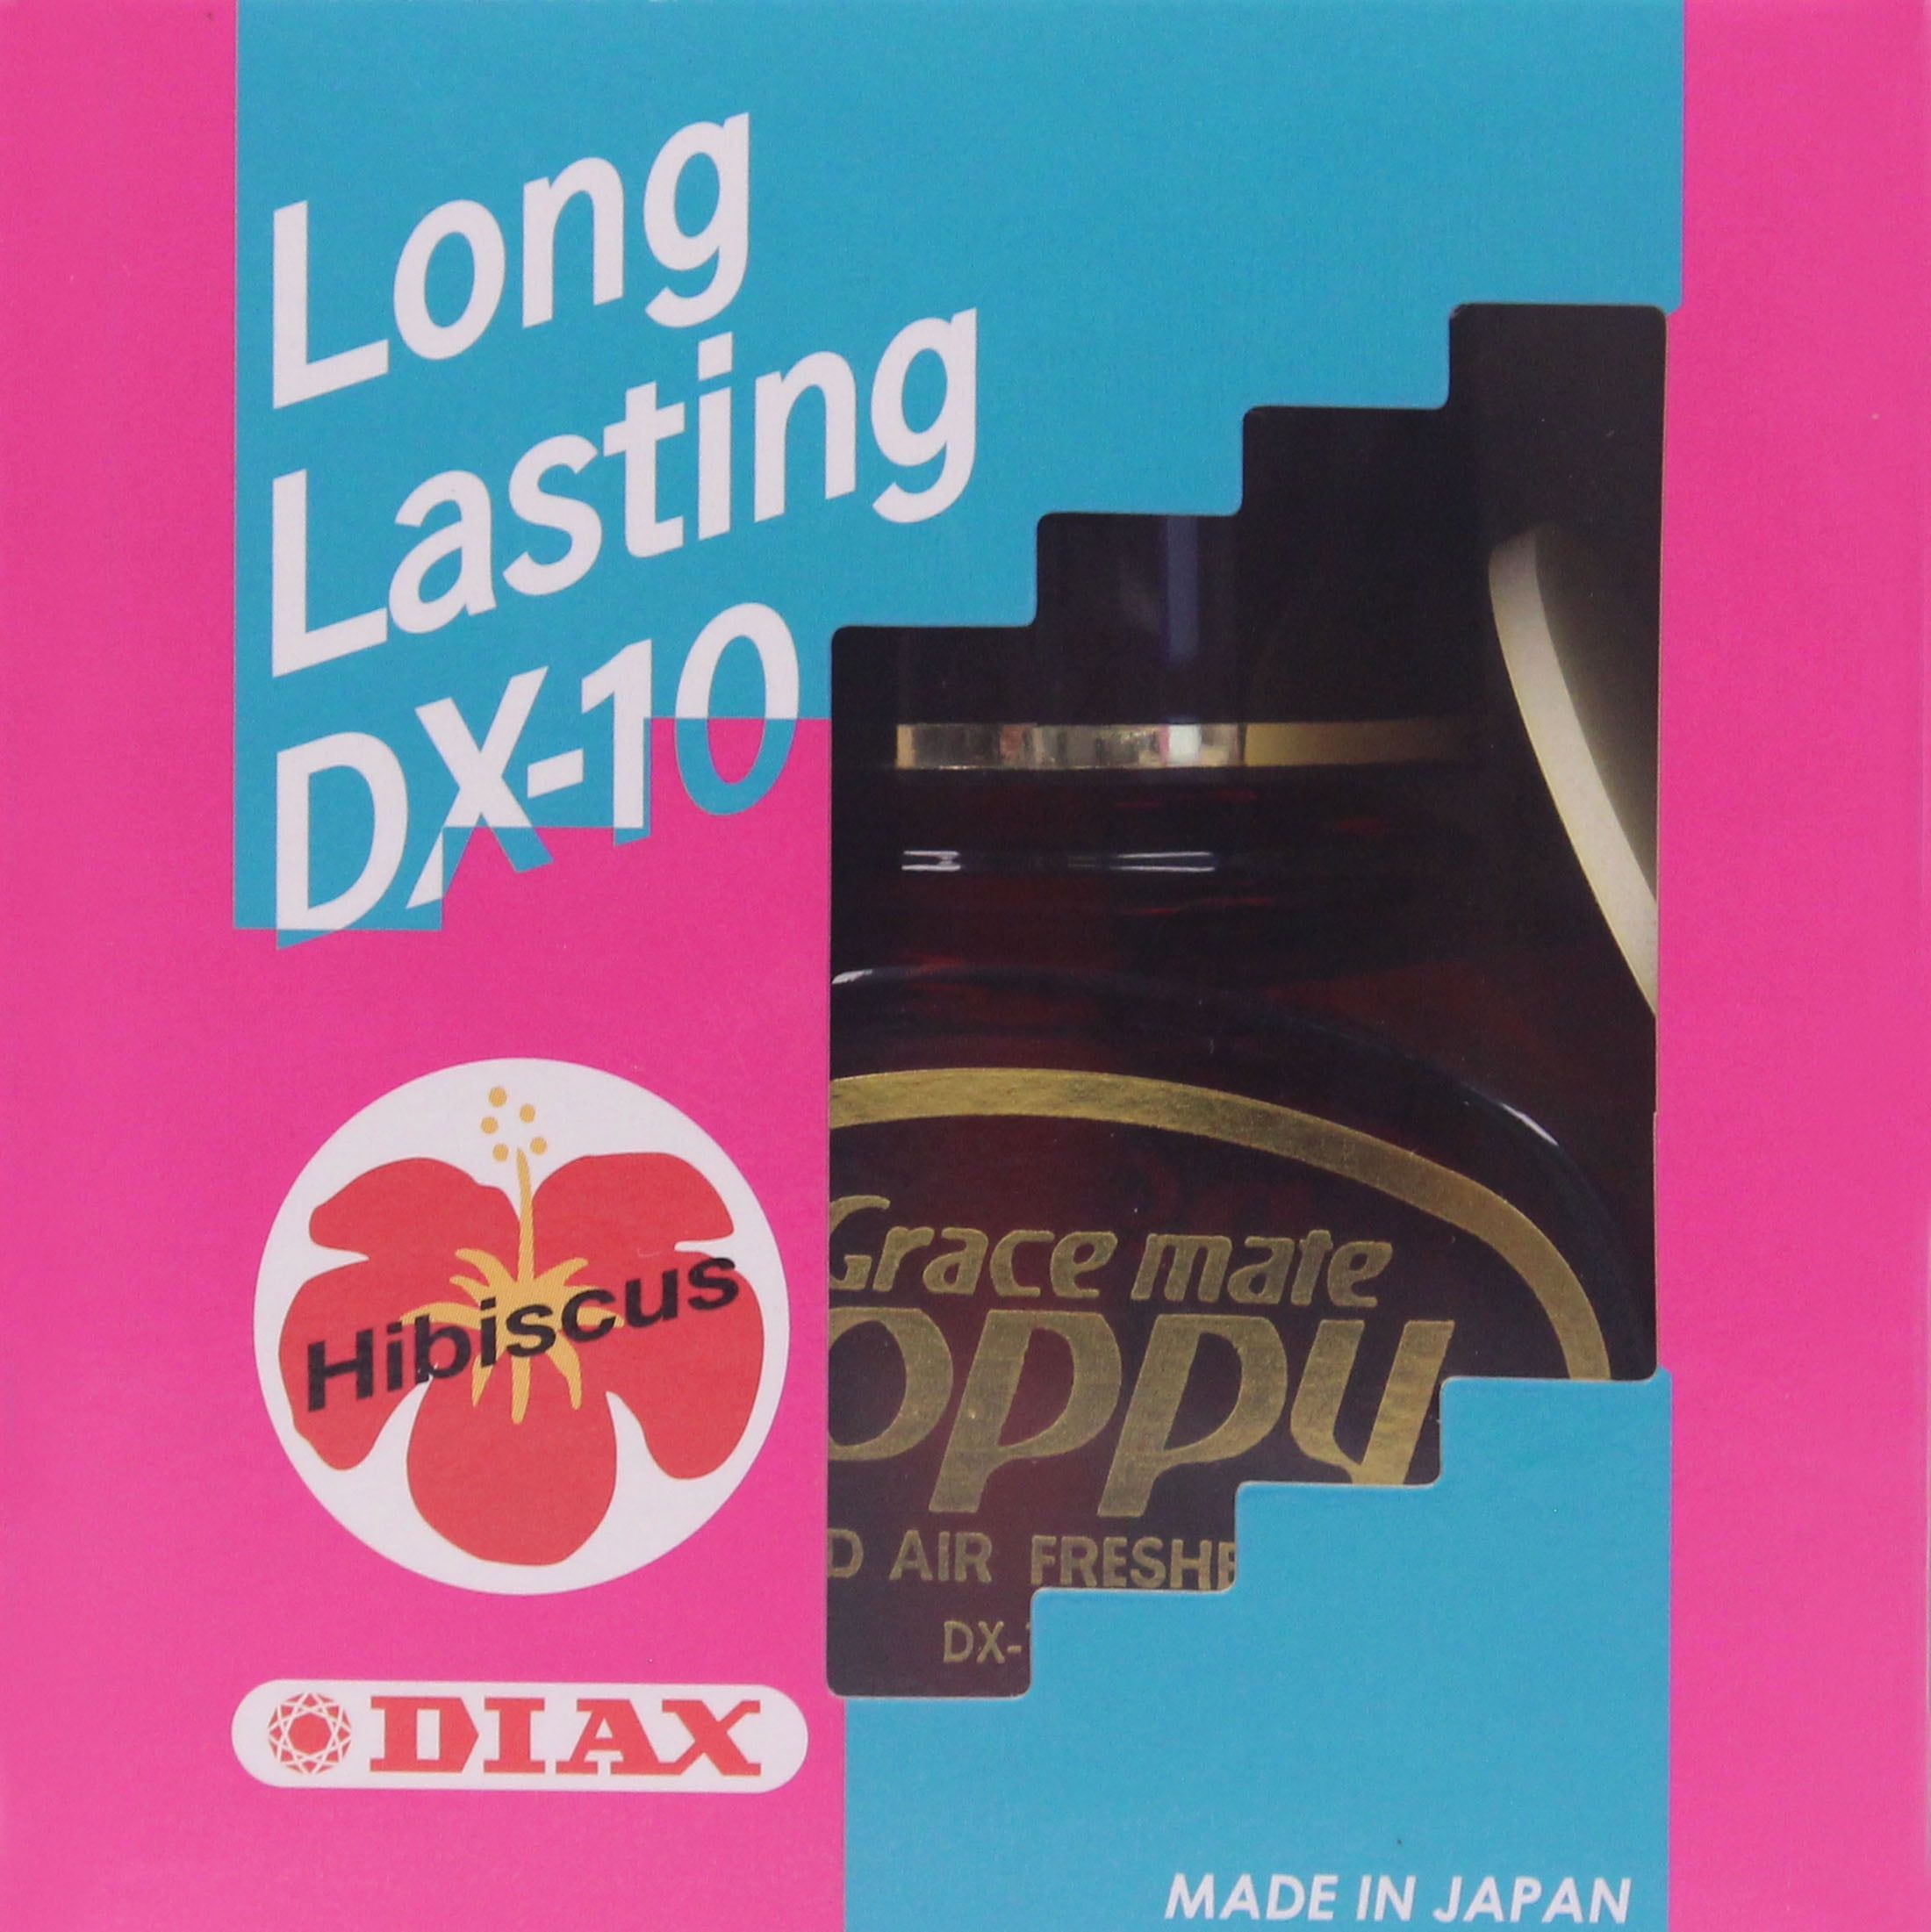 Diax Gracemate Poppy Hibiscus Air Freshener 1CT